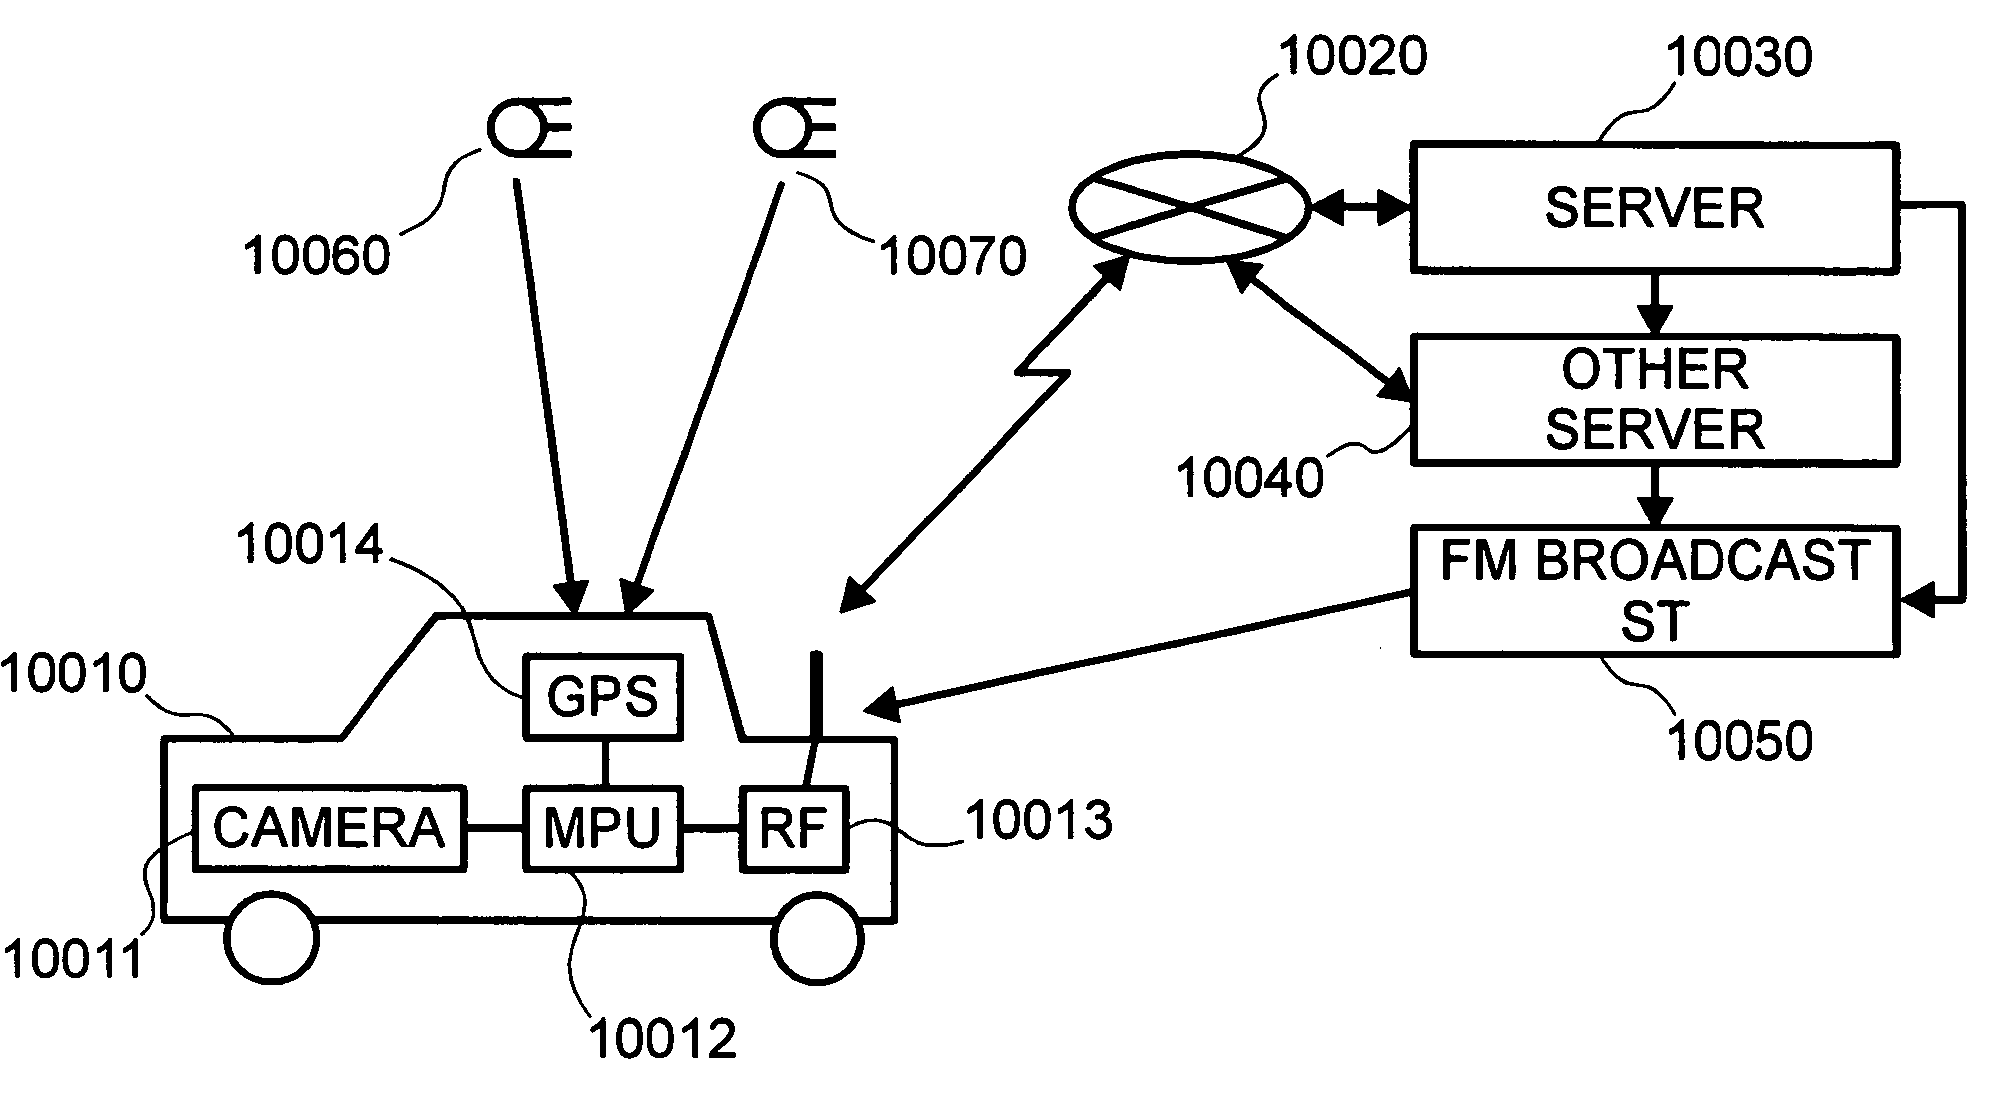 Terminal apparatus and image information server